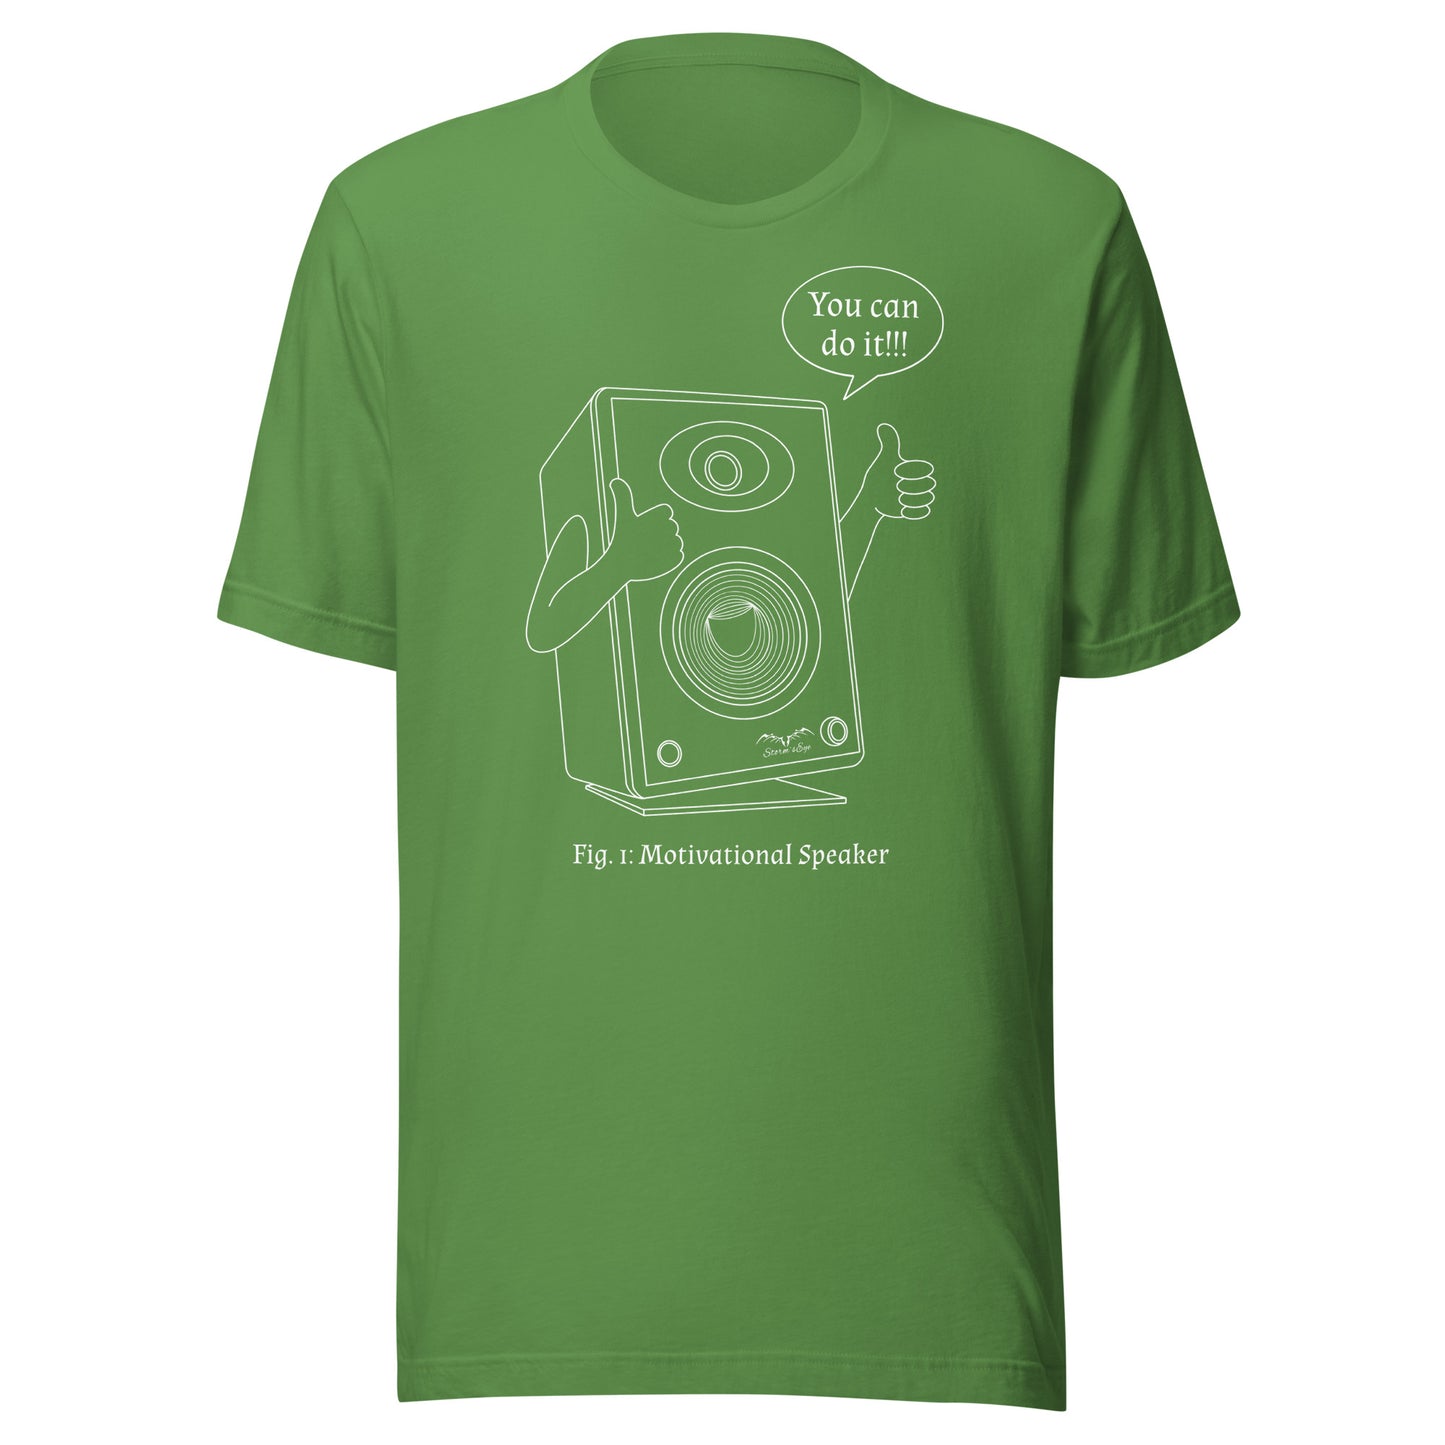 funny motivational speaker t-shirt, bright green, by Stormseye Design